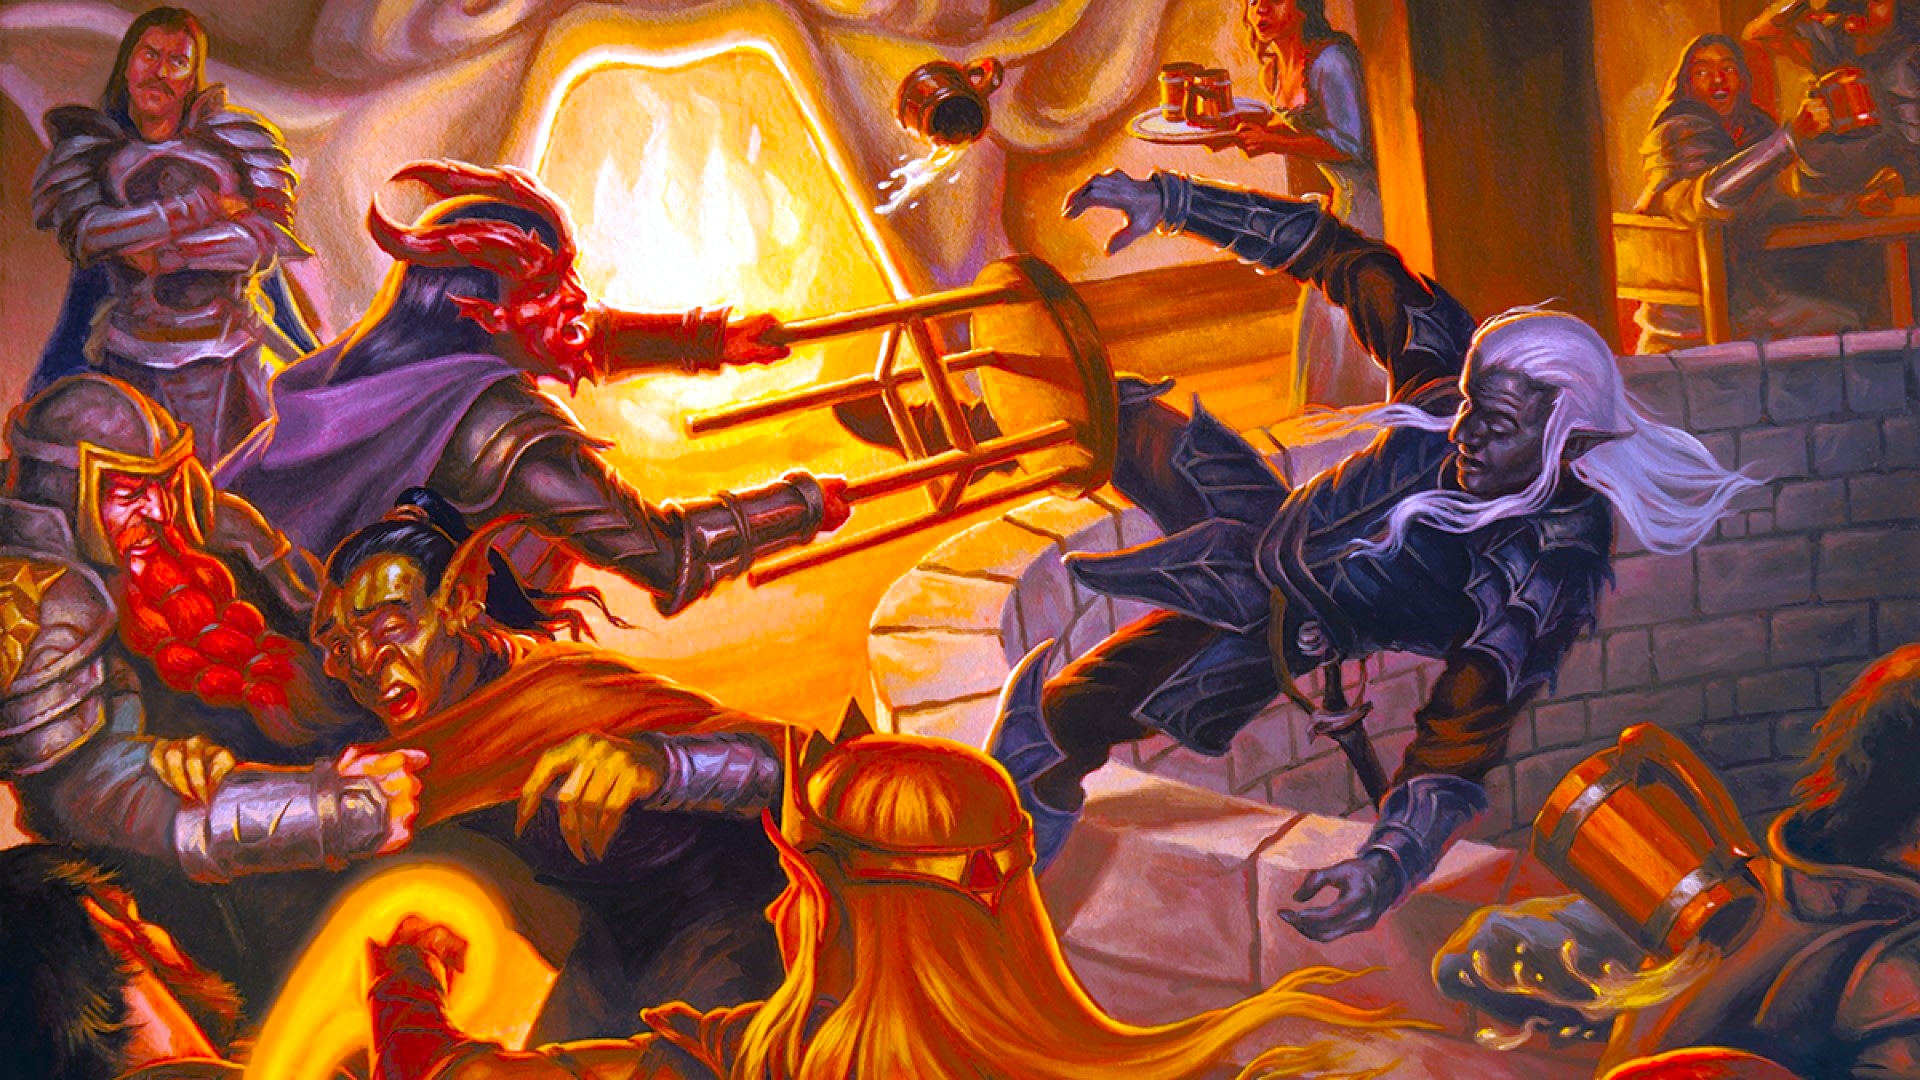 DnD OGL - Wizards of the Coast art of a fantasy bar brawl